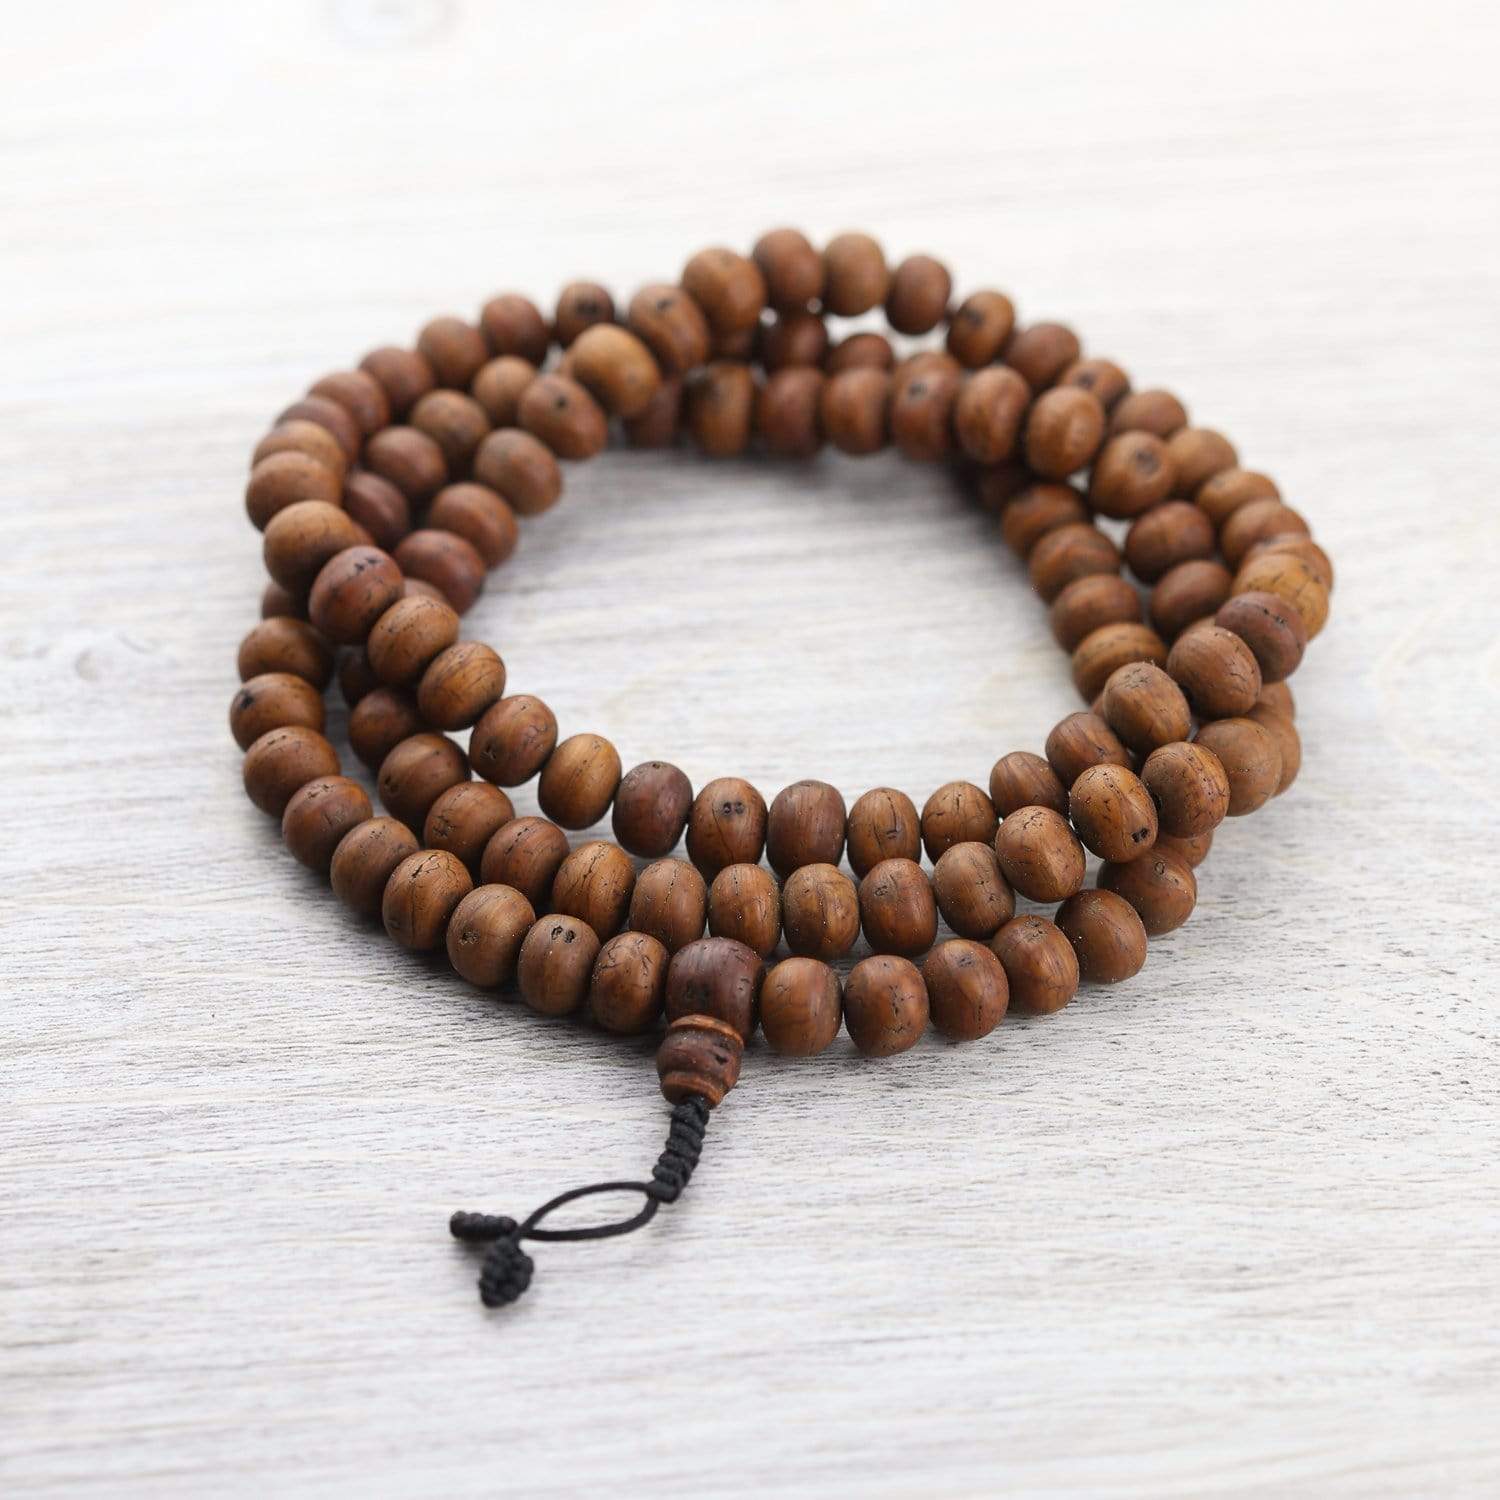 Mala Beads - Wrist Mala Bracelets and Mala Necklaces - DharmaShop